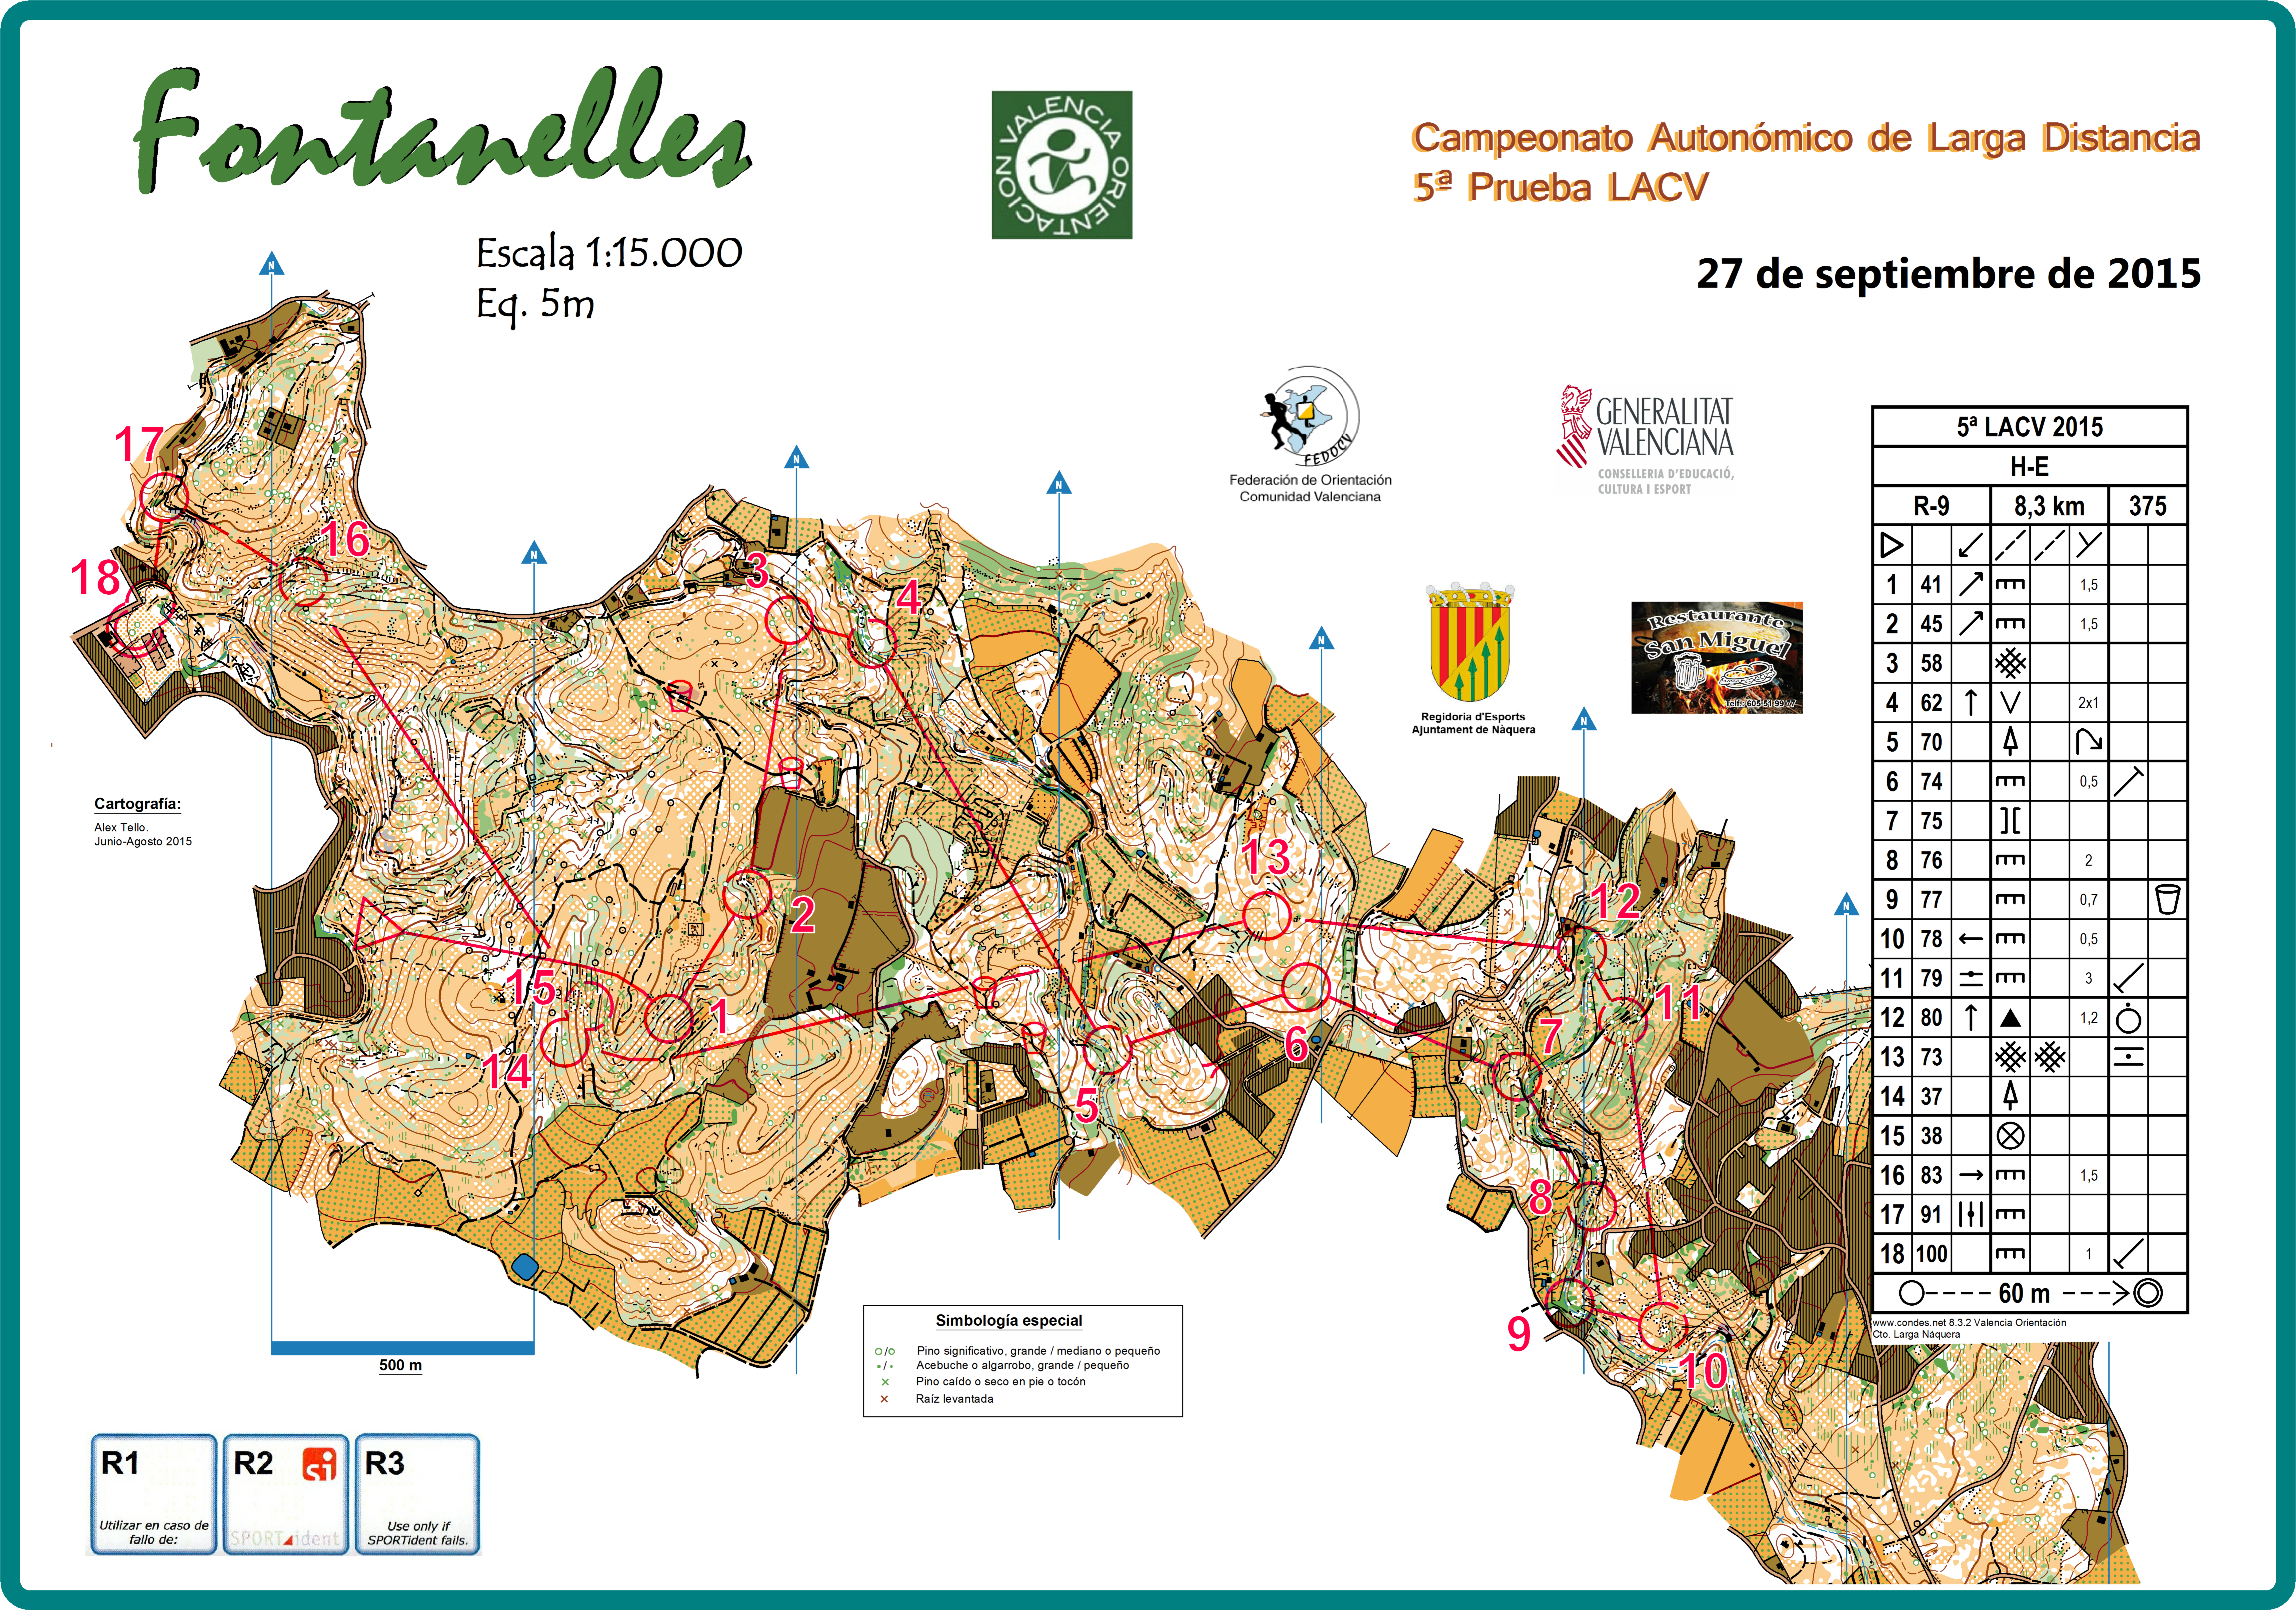 Fontanelles (2015-07-30)